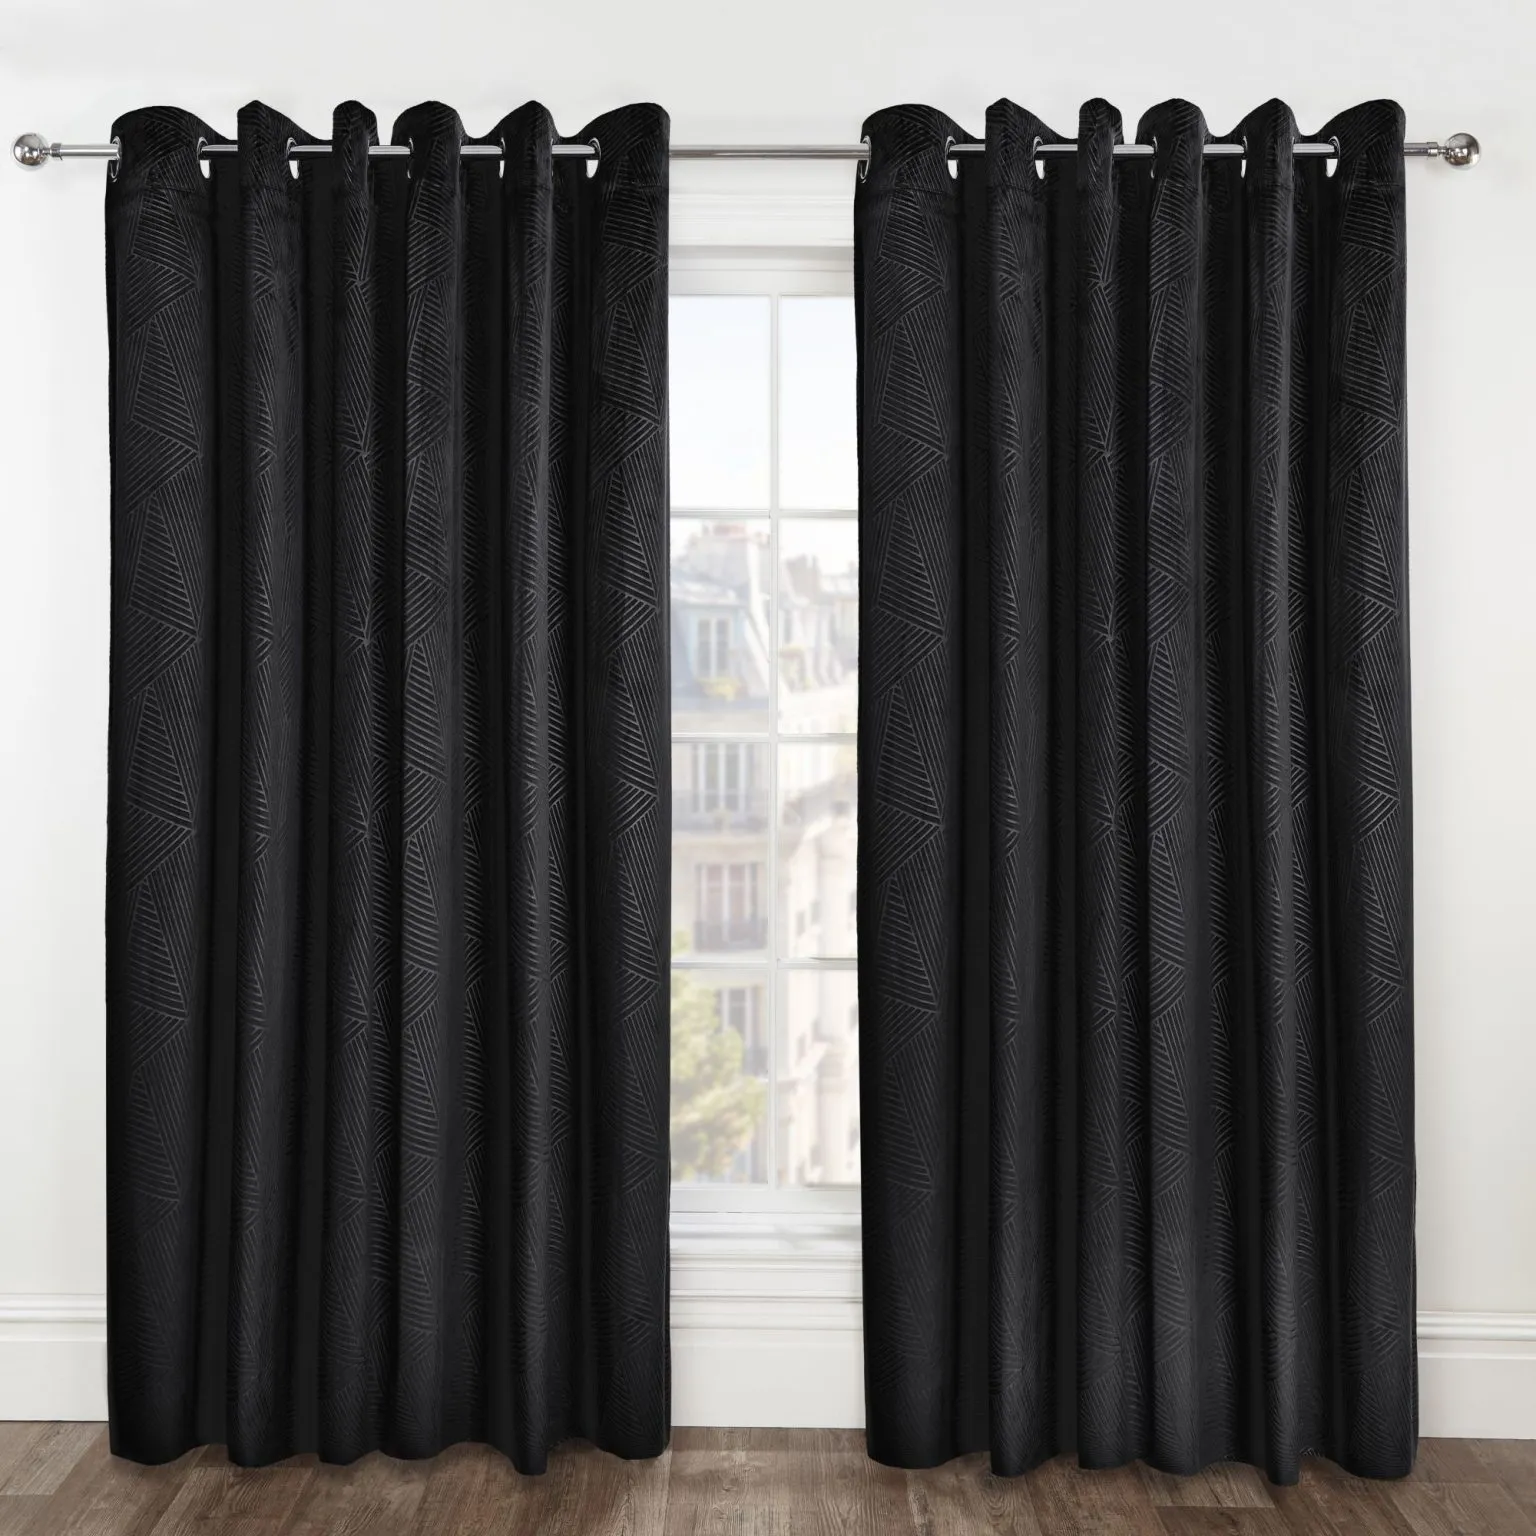 Deco Black Embossed Velvet Woven Thermal Blackout Eyelet Curtains Pair Set 220x220cms